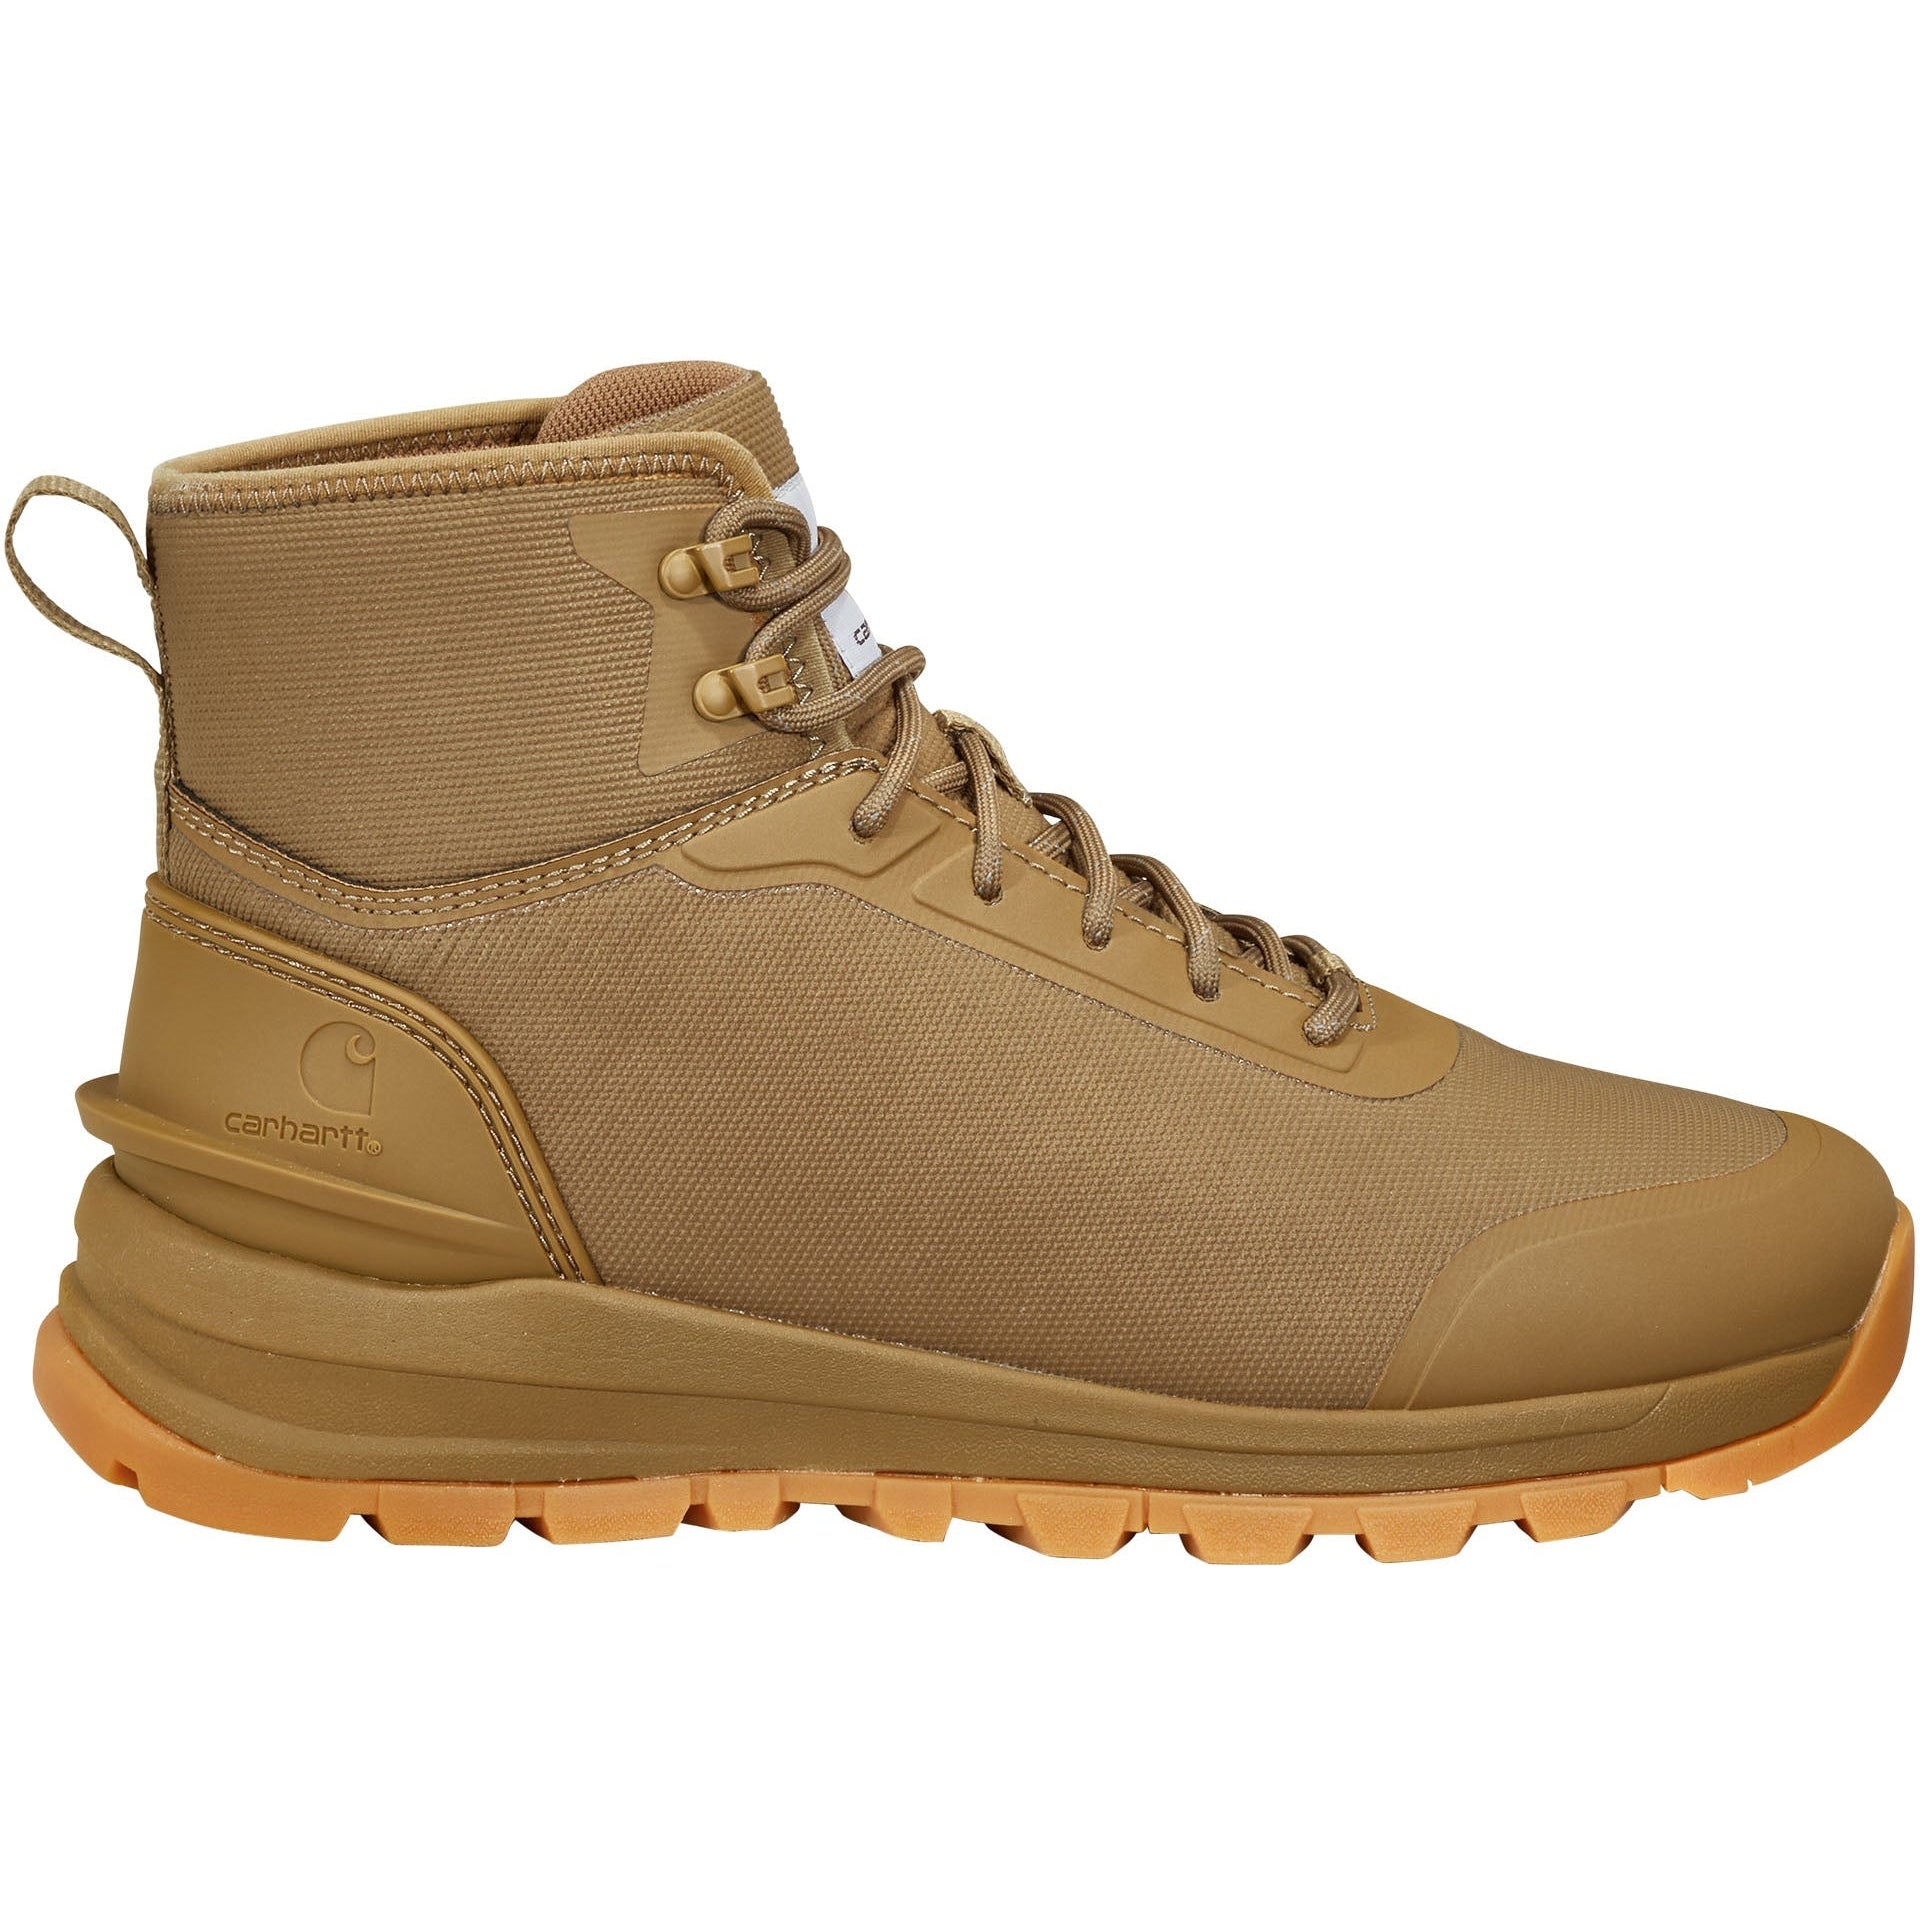 Carhartt Men's 5" Soft Toe Hiker Work Boot - Coyote Brown - FH5036-M 8 / Medium / Brown - Overlook Boots